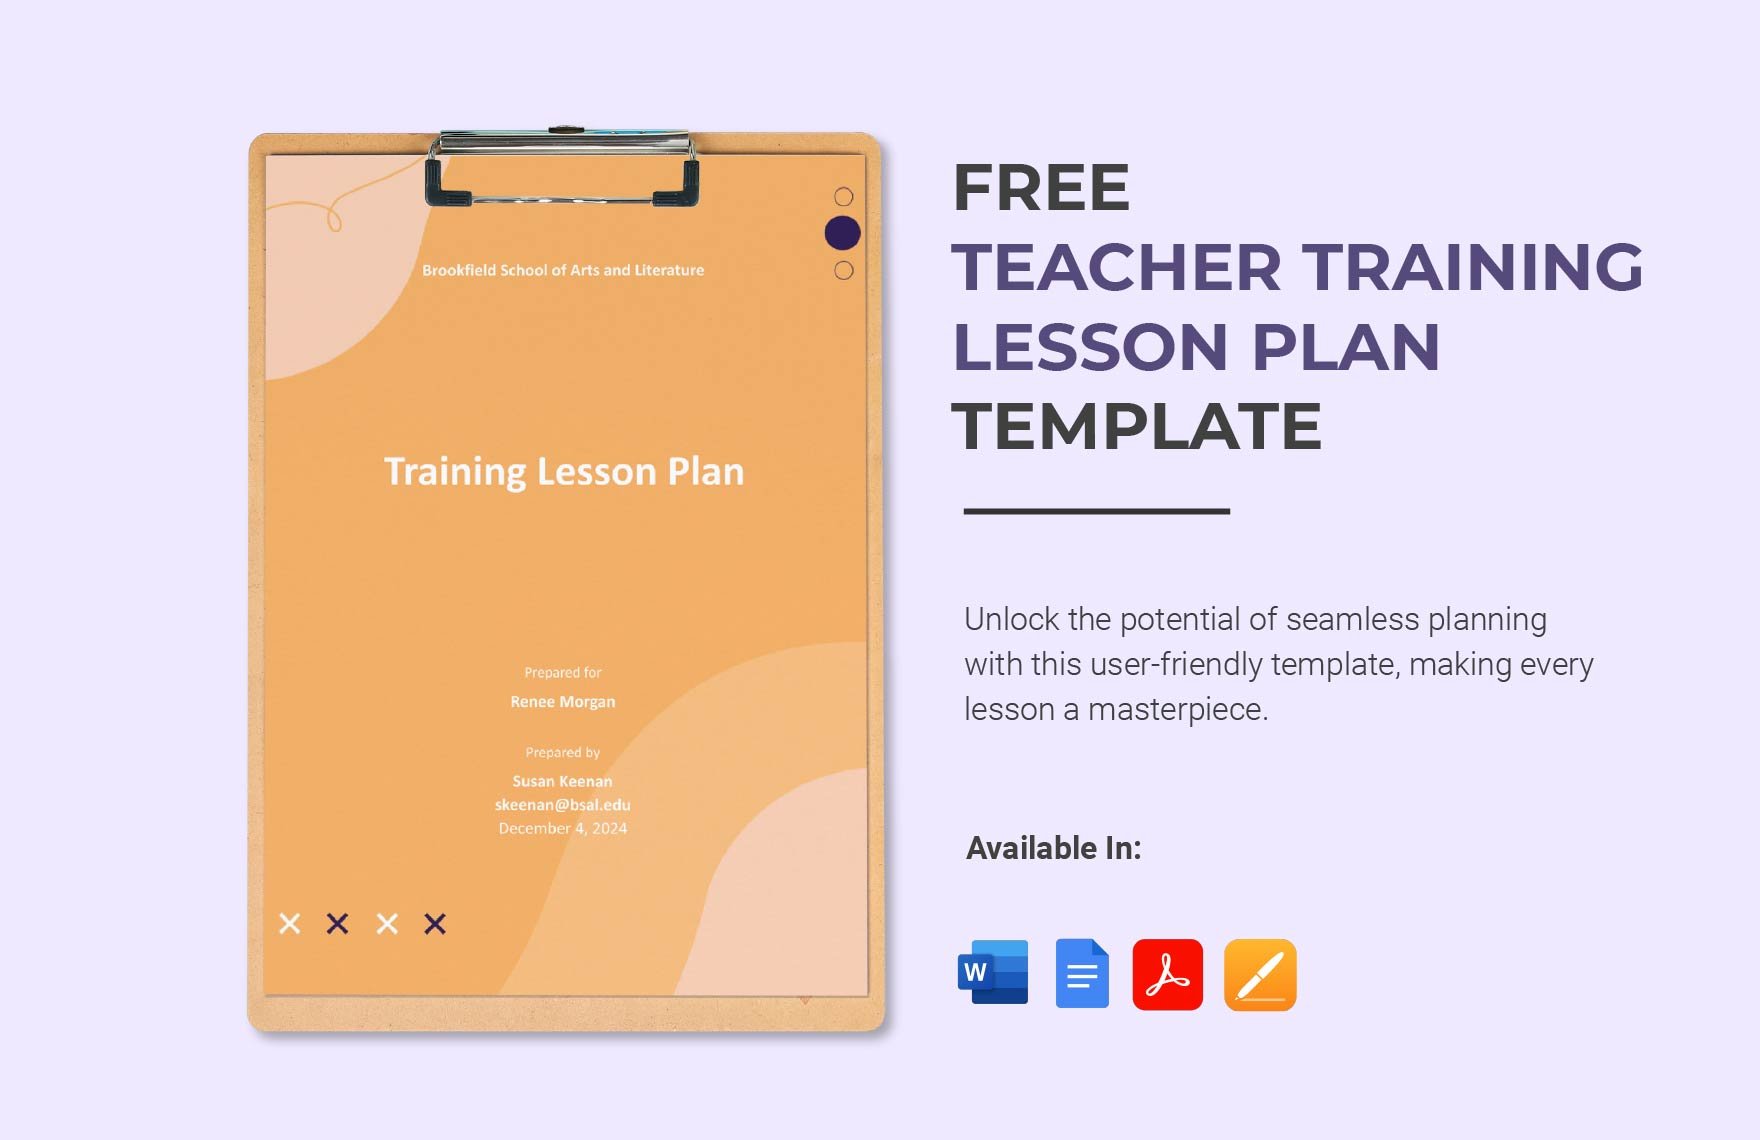 Free Teacher Training Lesson Plan Template